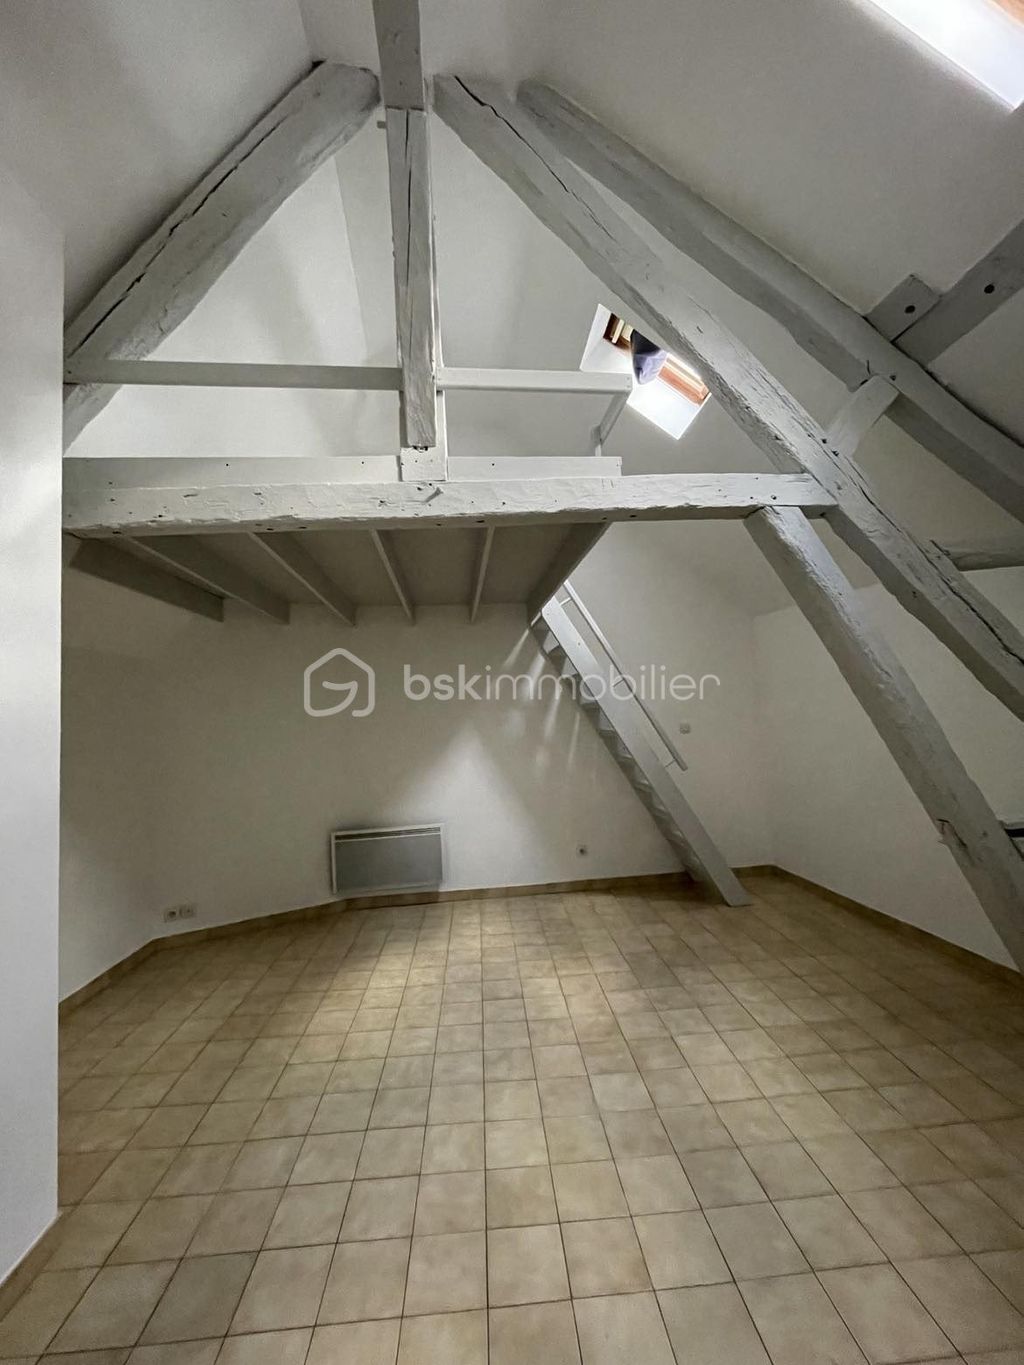 Achat appartement 2 pièce(s) Chartres